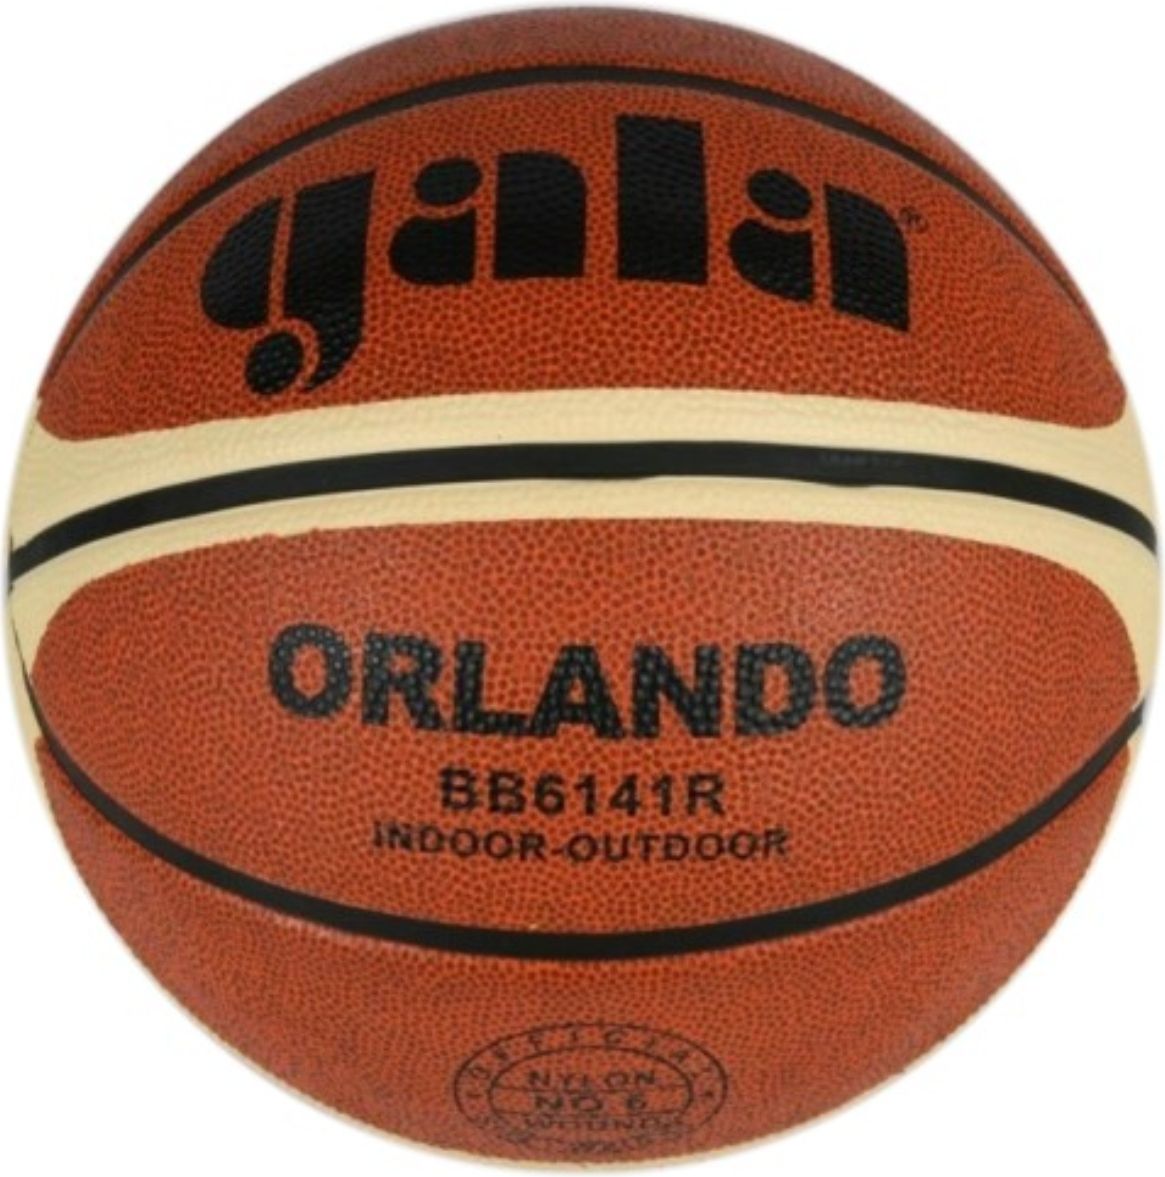 Basketbalový míč GALA Orlando BB6141R - obrázek 1